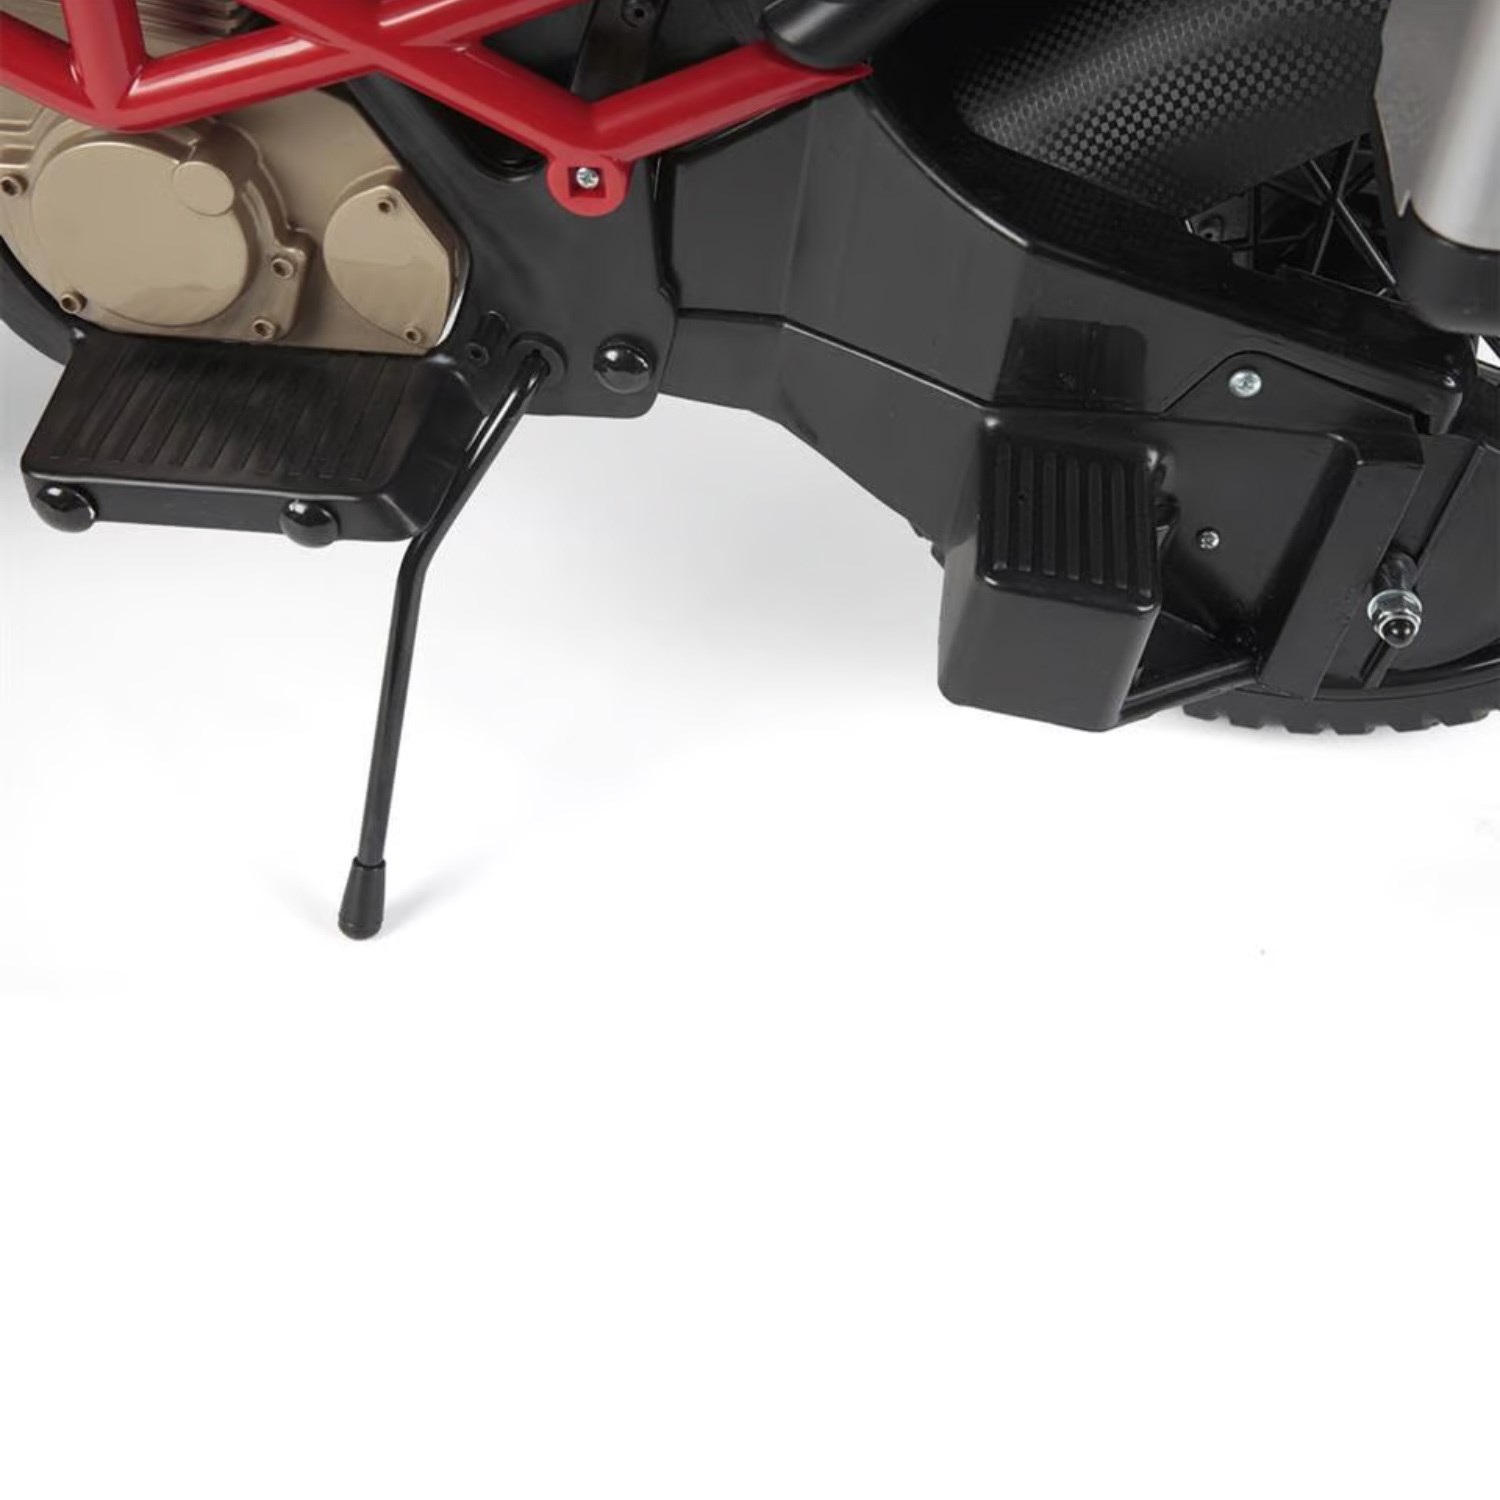 Peg Perego Ducati Enduro Akülü Motor 12V AMC0023 Kırmızı-Siyah